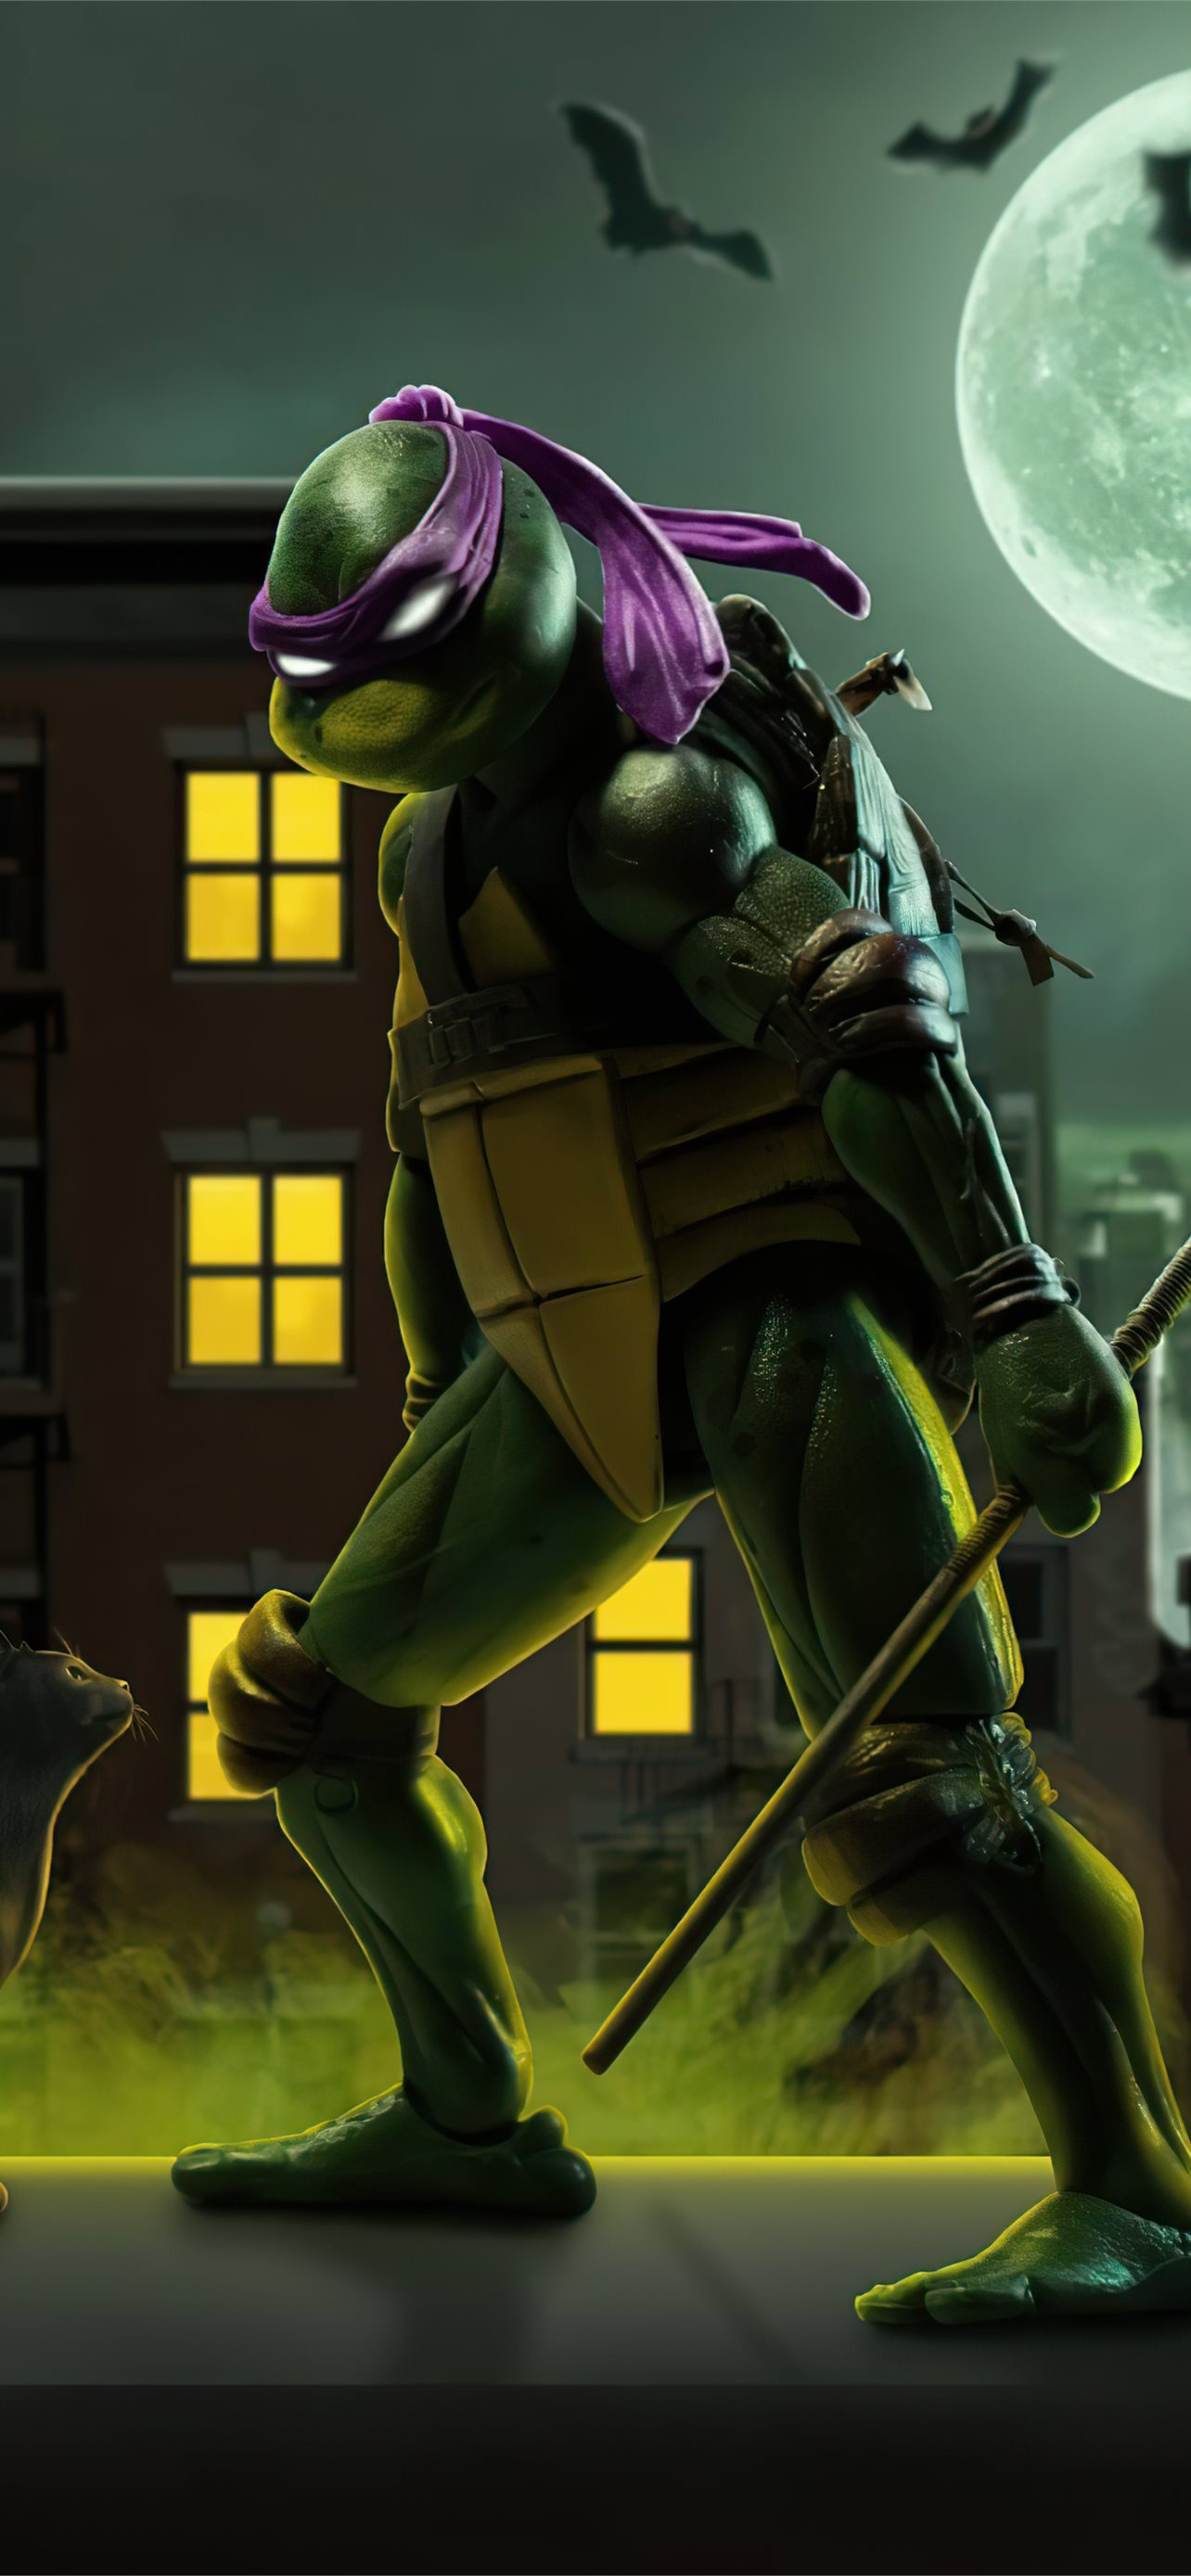 Ninja Turtles Iphone Wallpapers